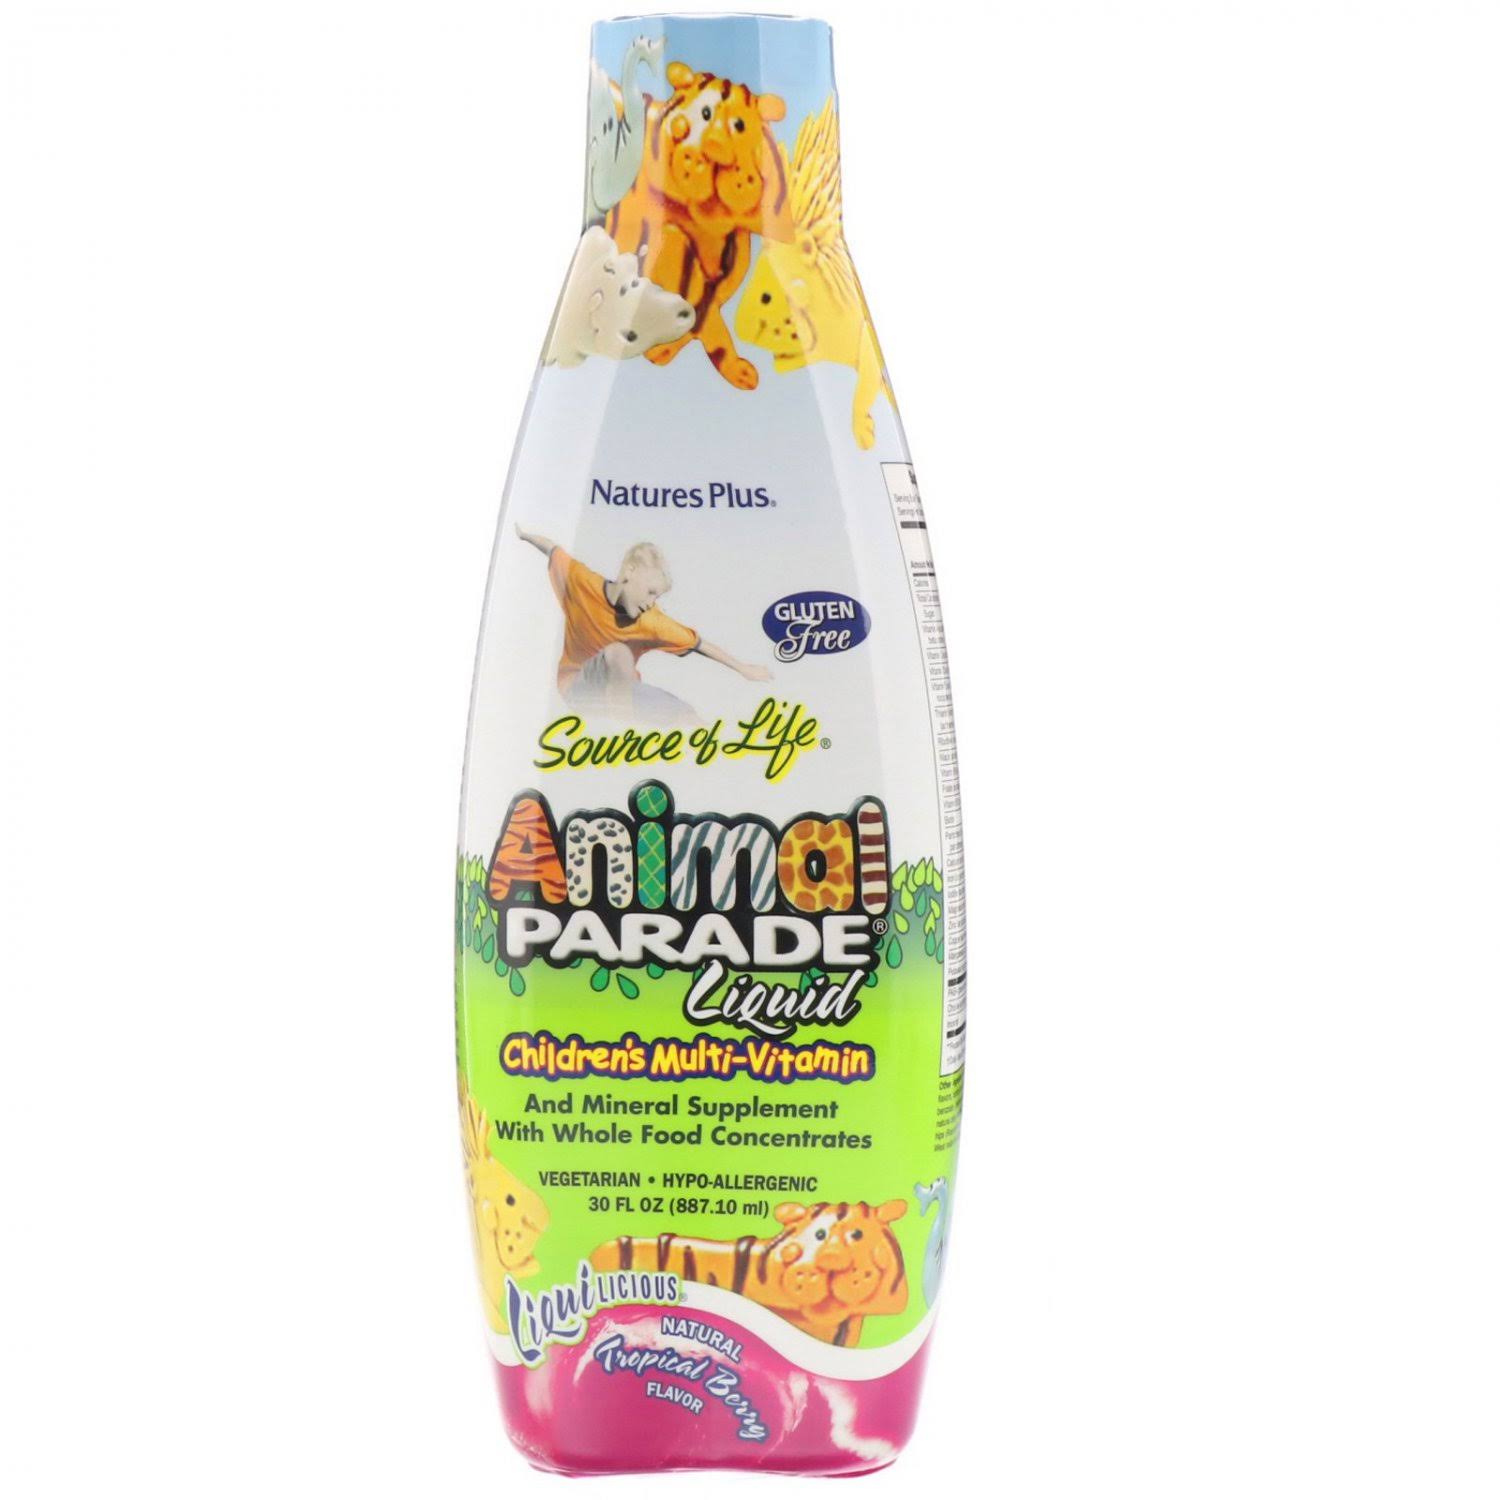 Nature's Plus Source of Life Animal Parade Children's Multi-Vitamin Liquid - Tropical Berry